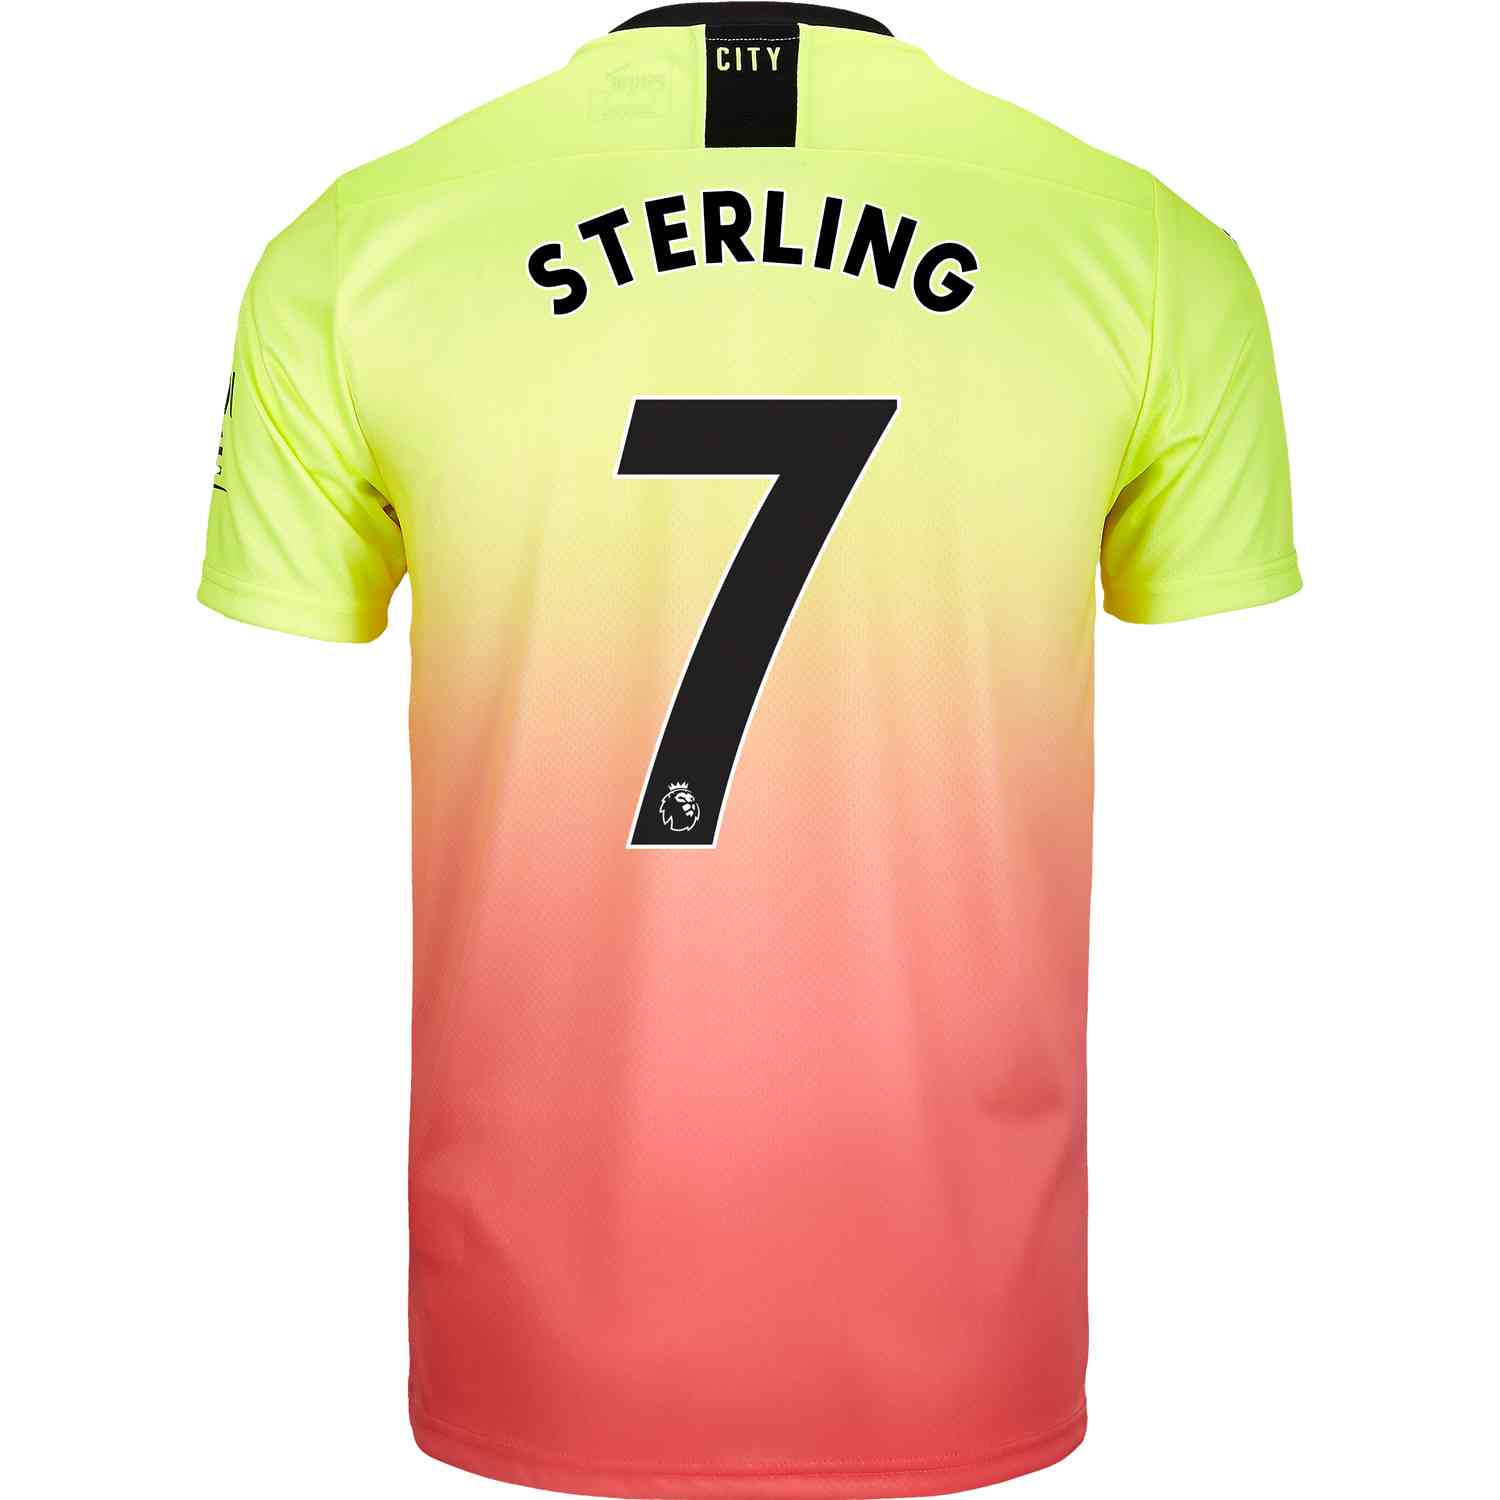 sterling shirt number